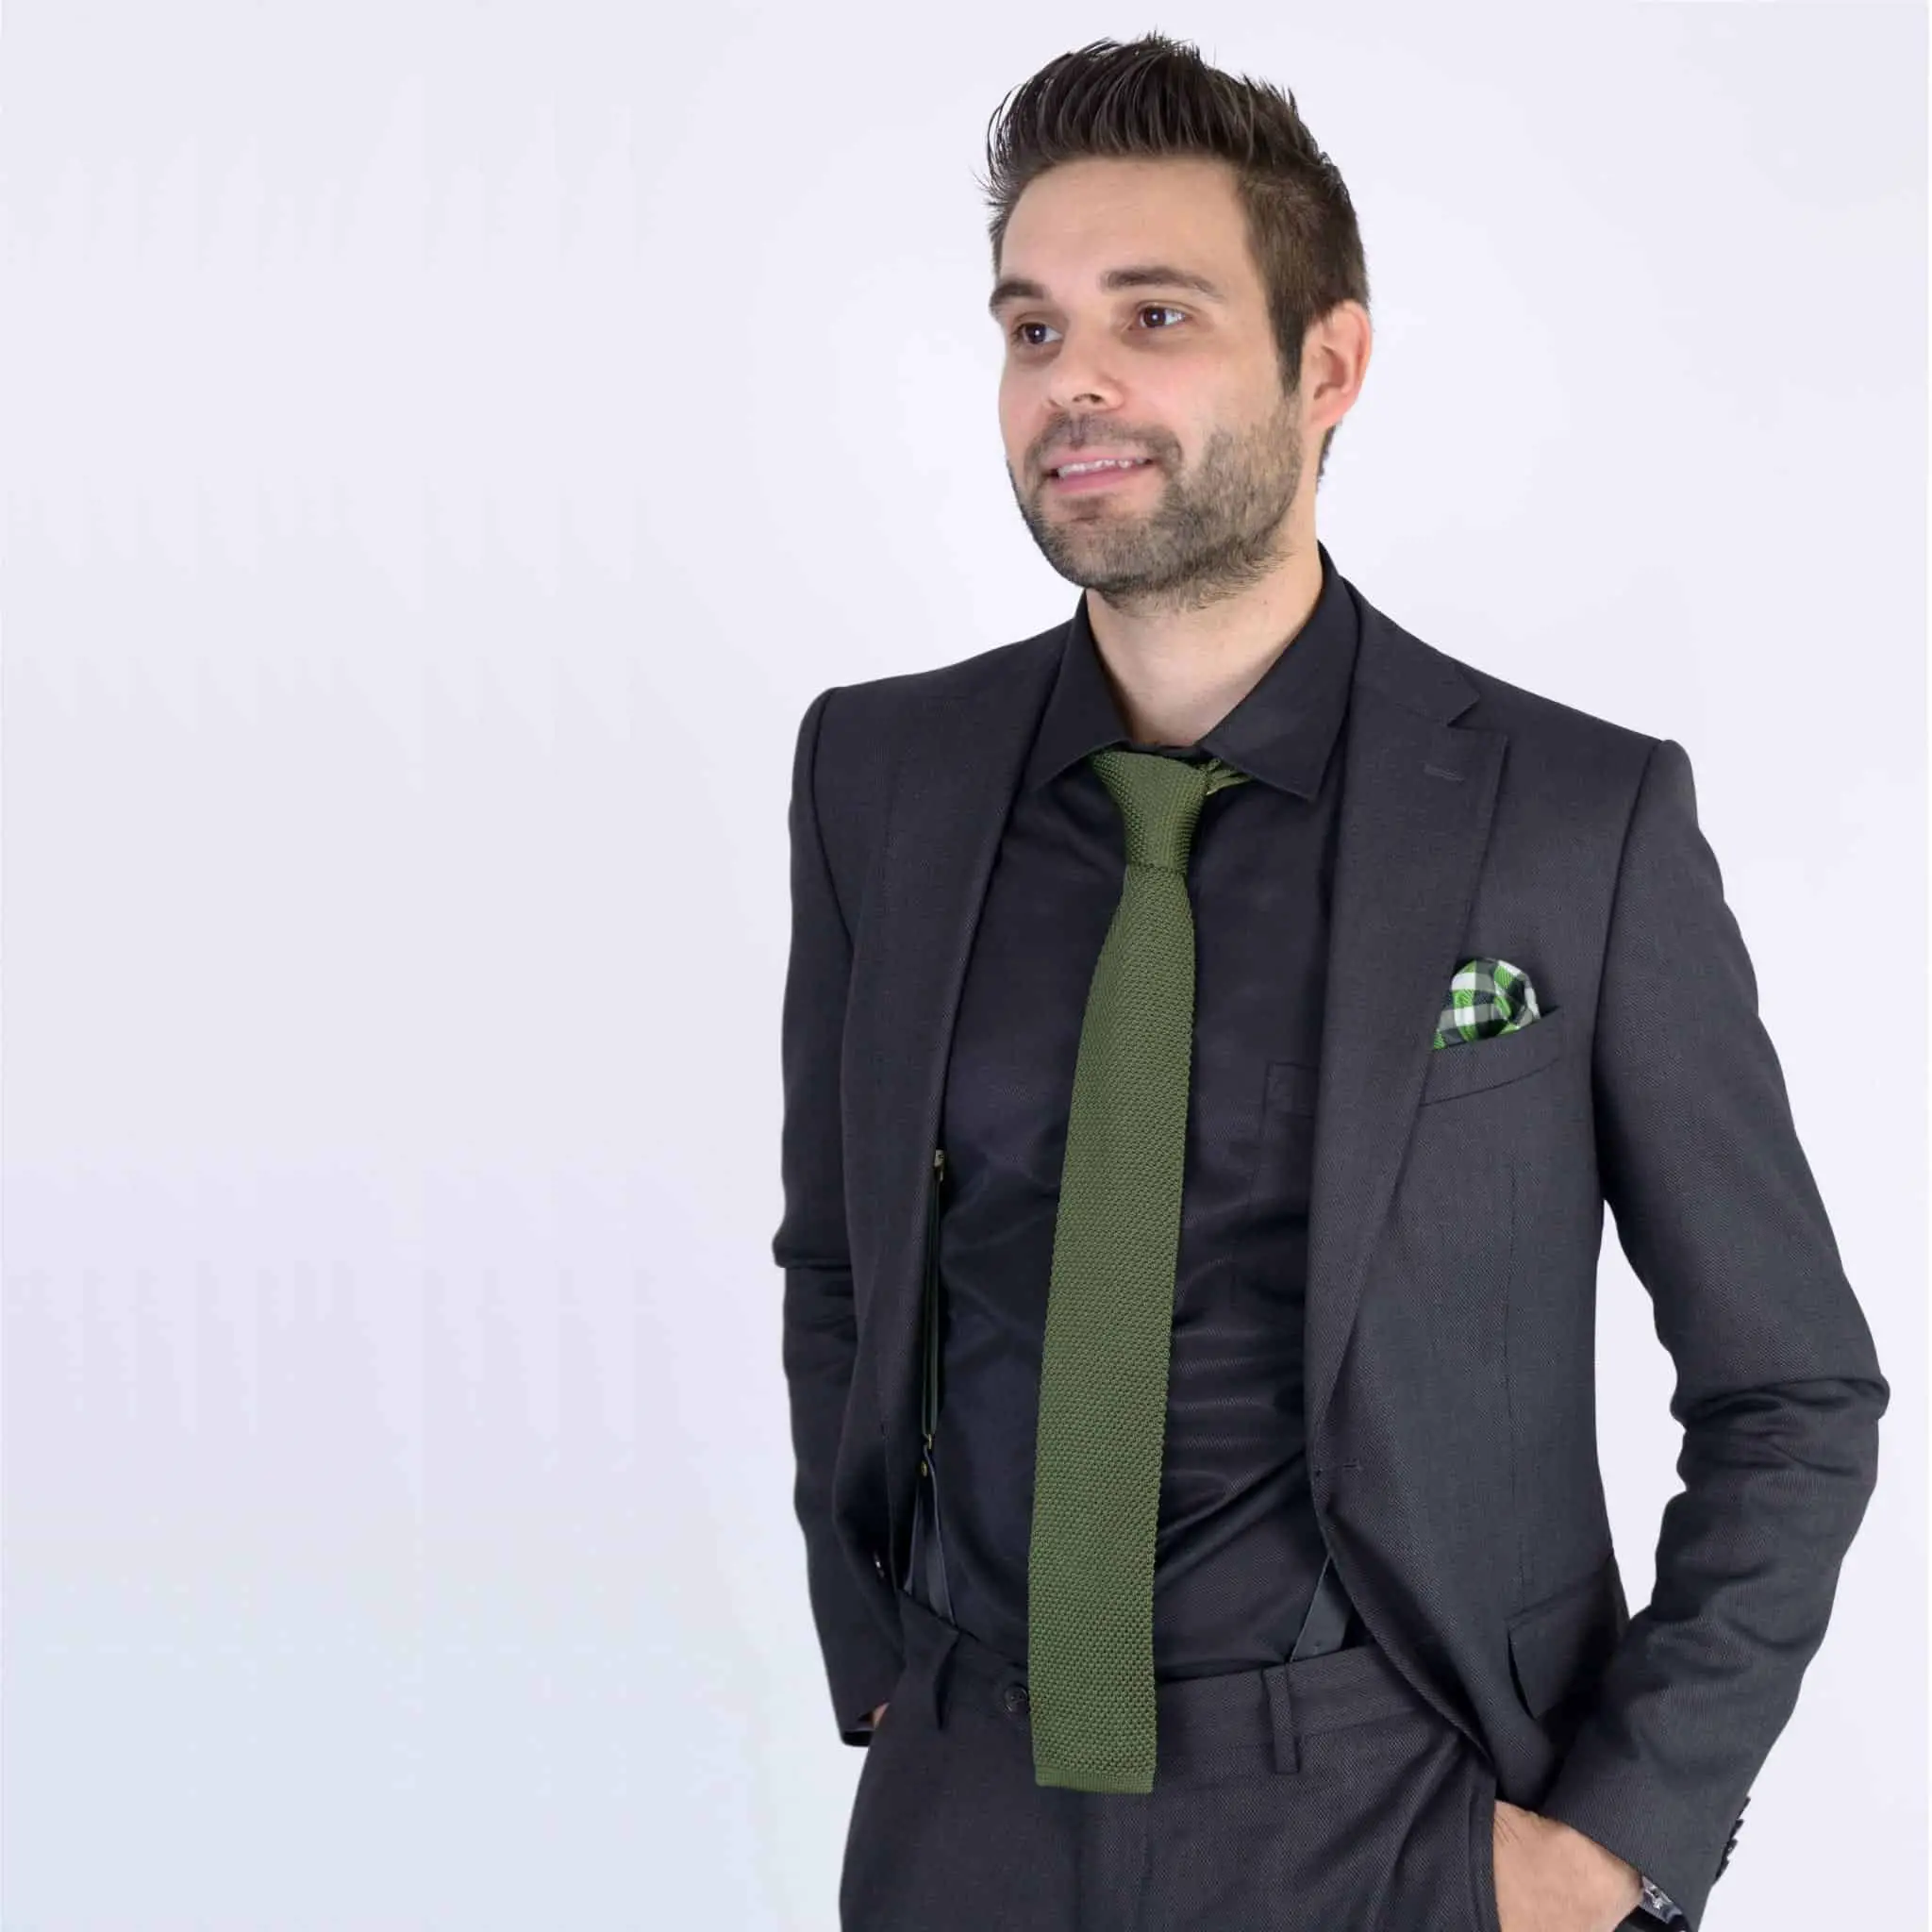 zwart-overhemd-groene-gebreide-stropdas